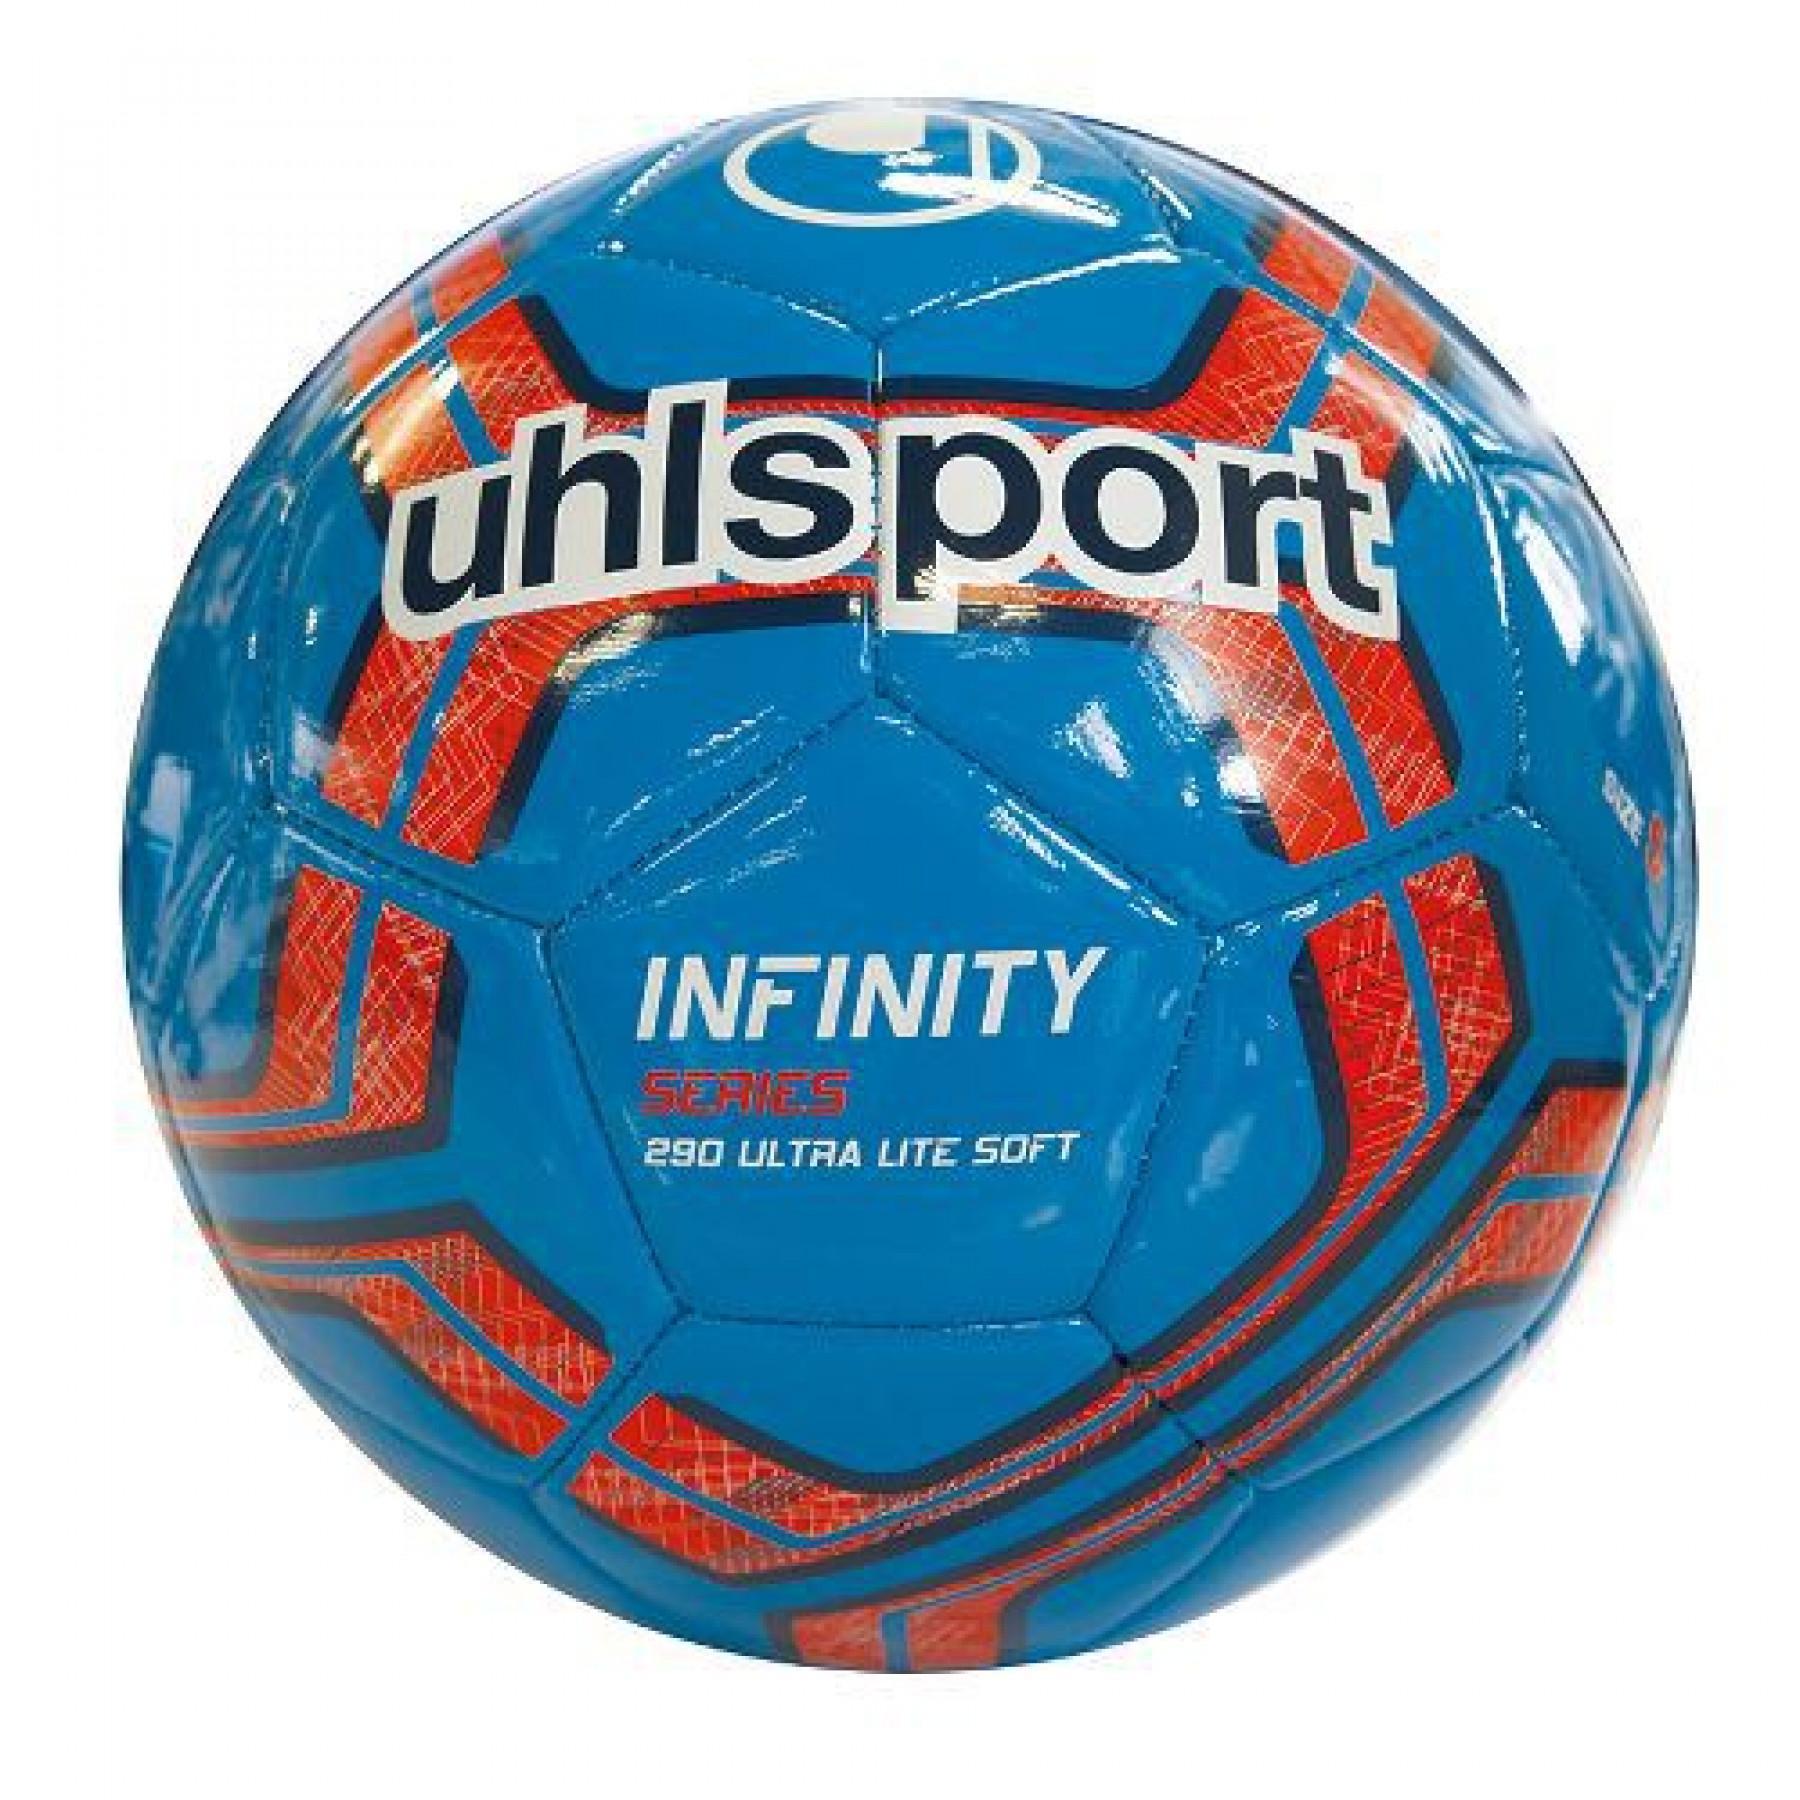 Ballon Uhlsport Infinity 290 Ultra Lite Soft